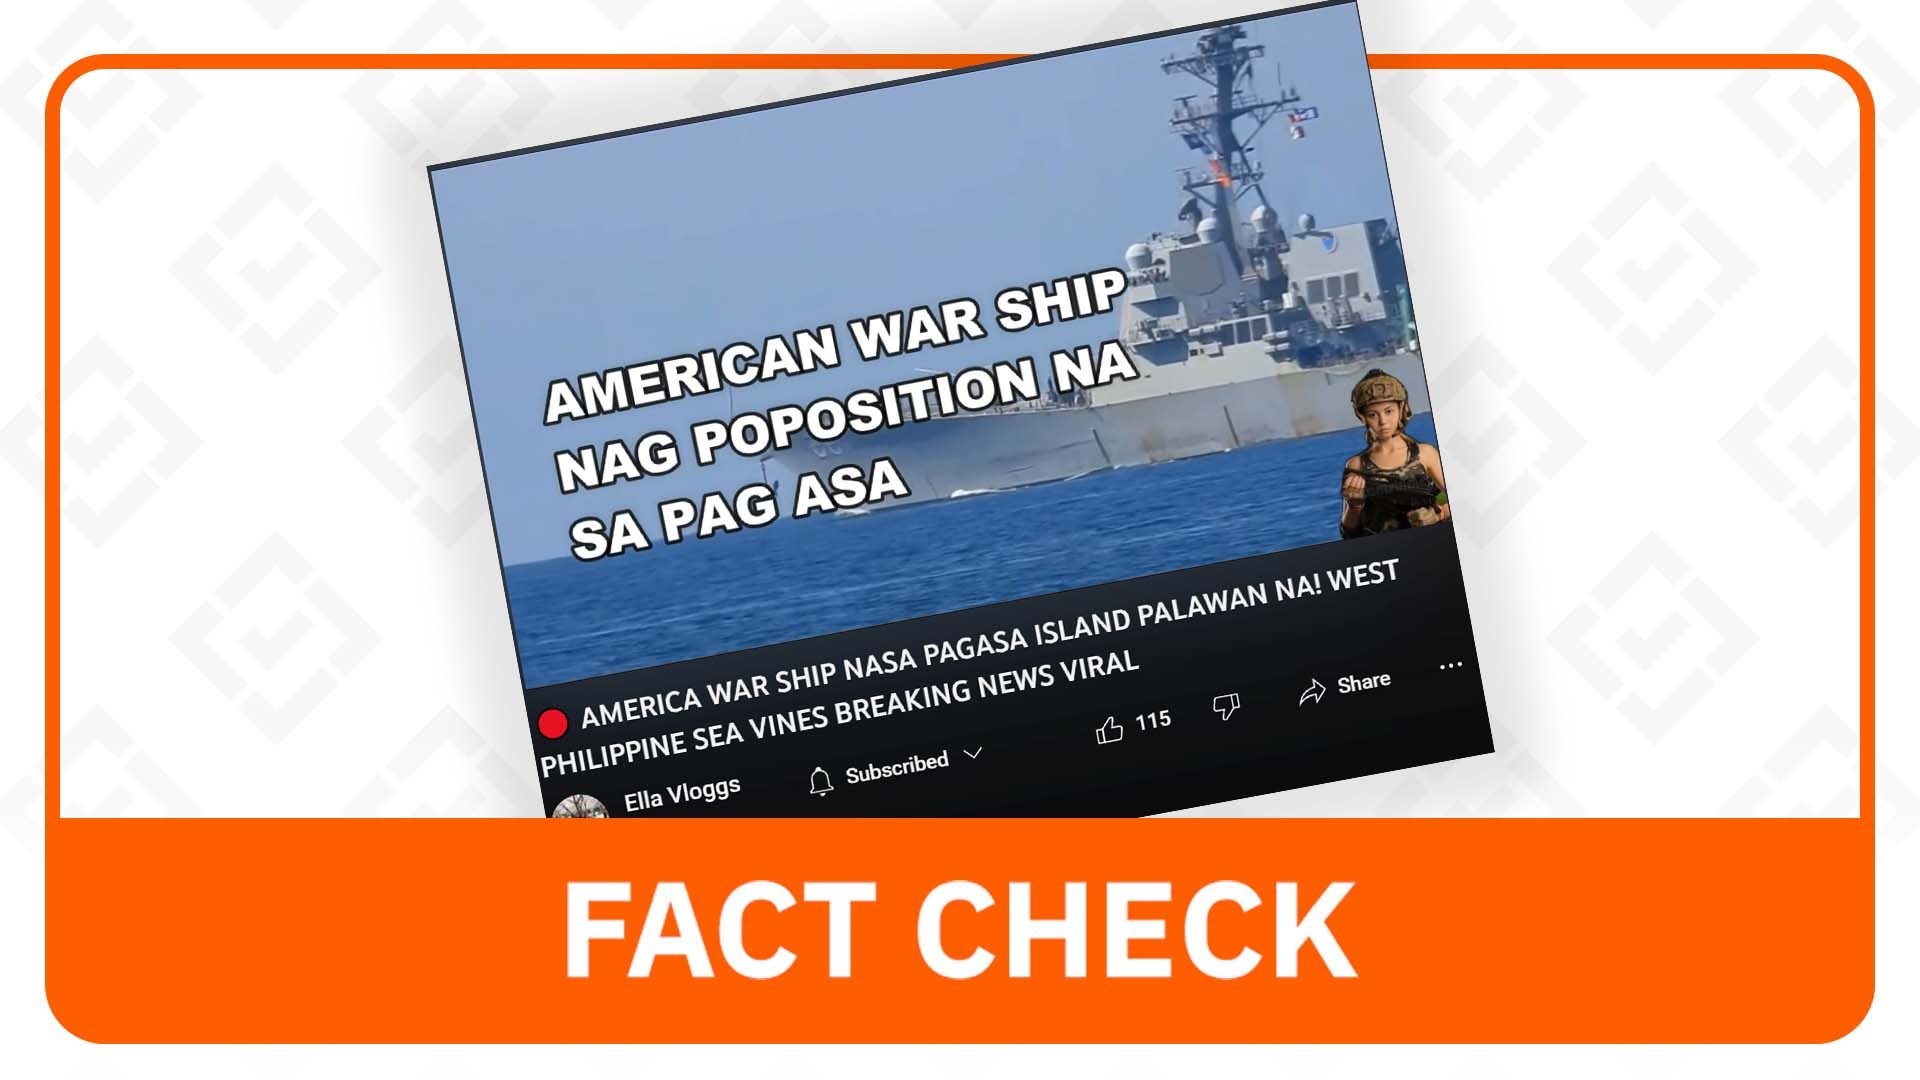 FACT CHECK: Video shows US ship in Mediterranean Sea, not Pag-asa Island